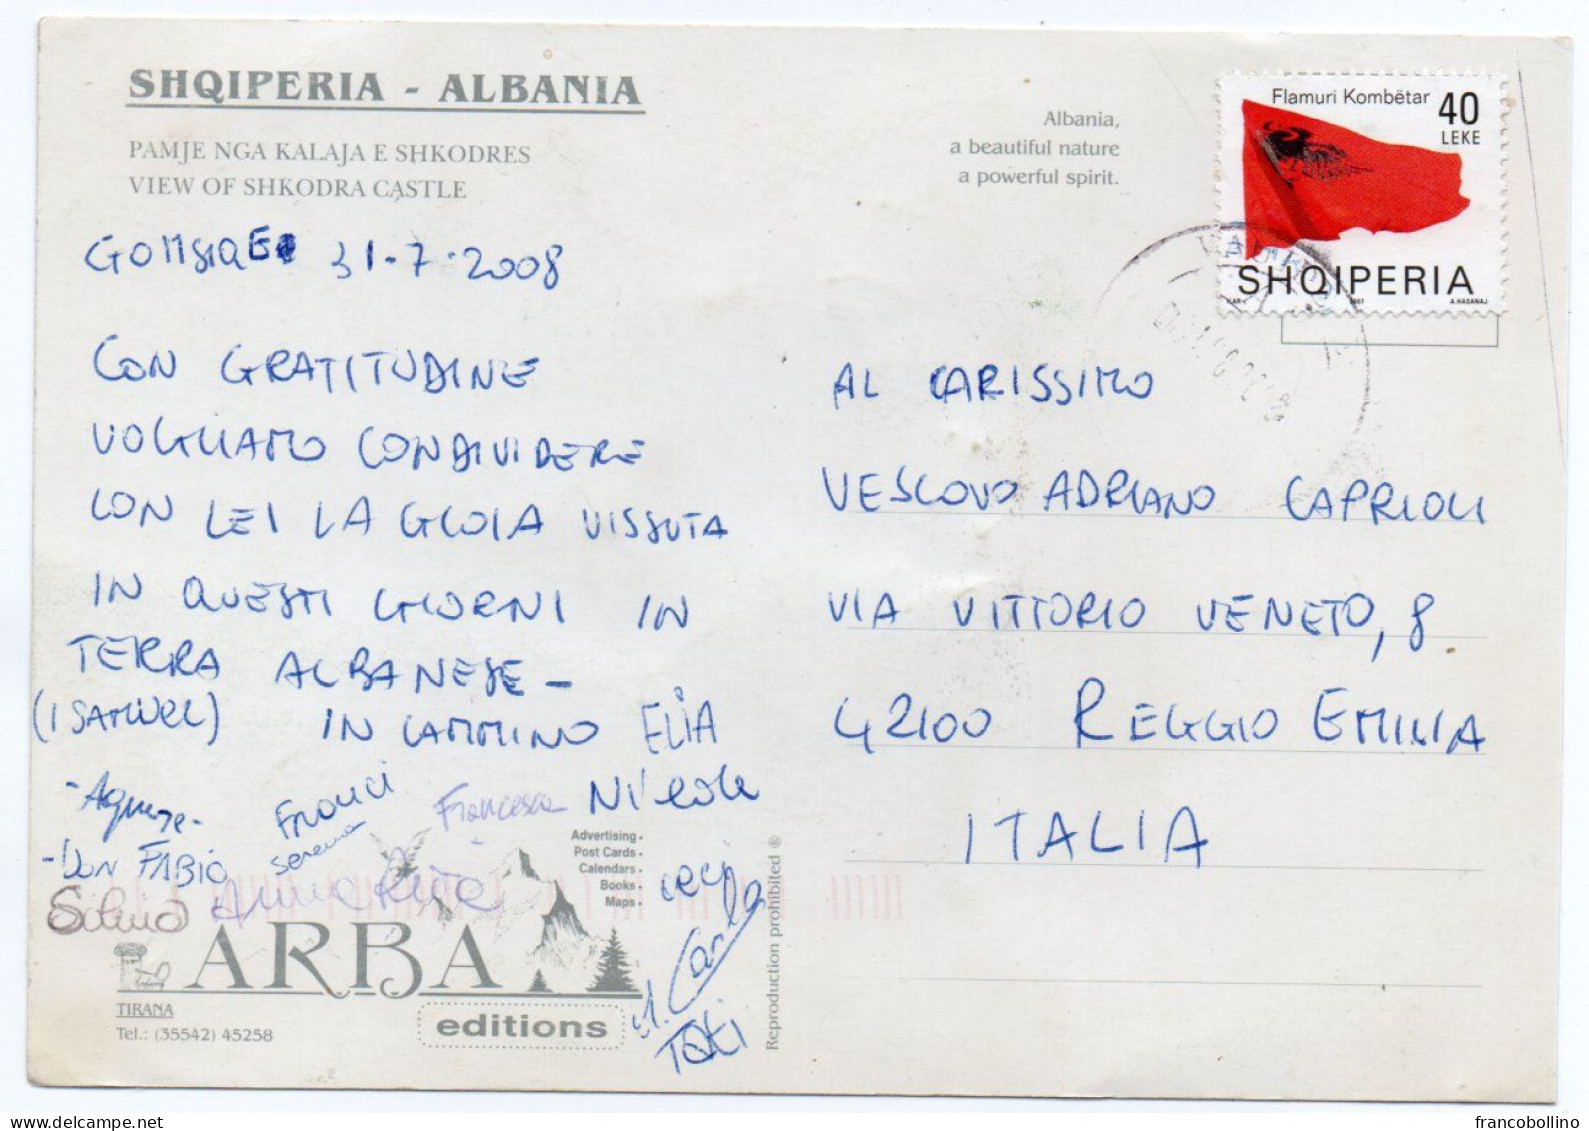 ALBANIA/SHQIPERIA -VIEW OF SHKODRA ROZAFA CASTLE / THEMATIC STAMP-FLAG / VAU I DEJES CANCEL 2008 - Albanie